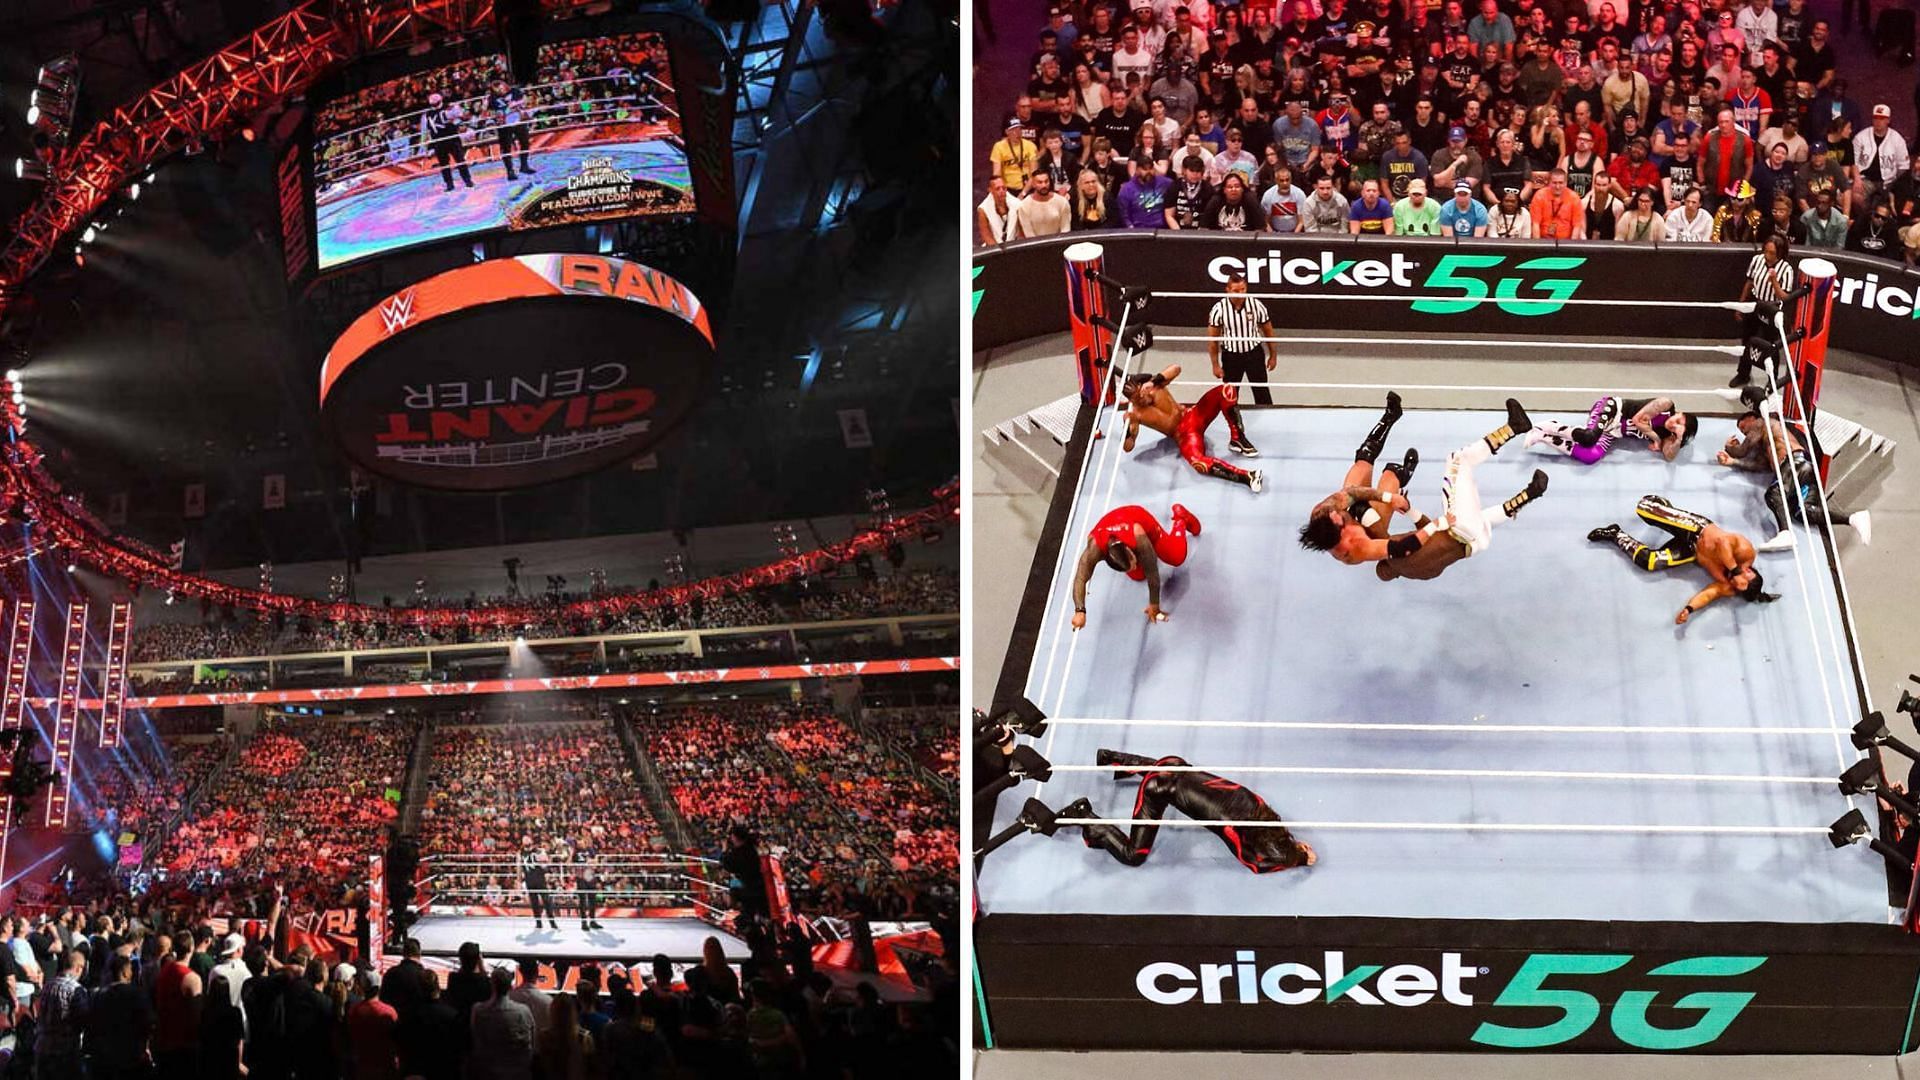 WWE RAW airs on Monday nights on the USA Network [Image credits: wwe.com]